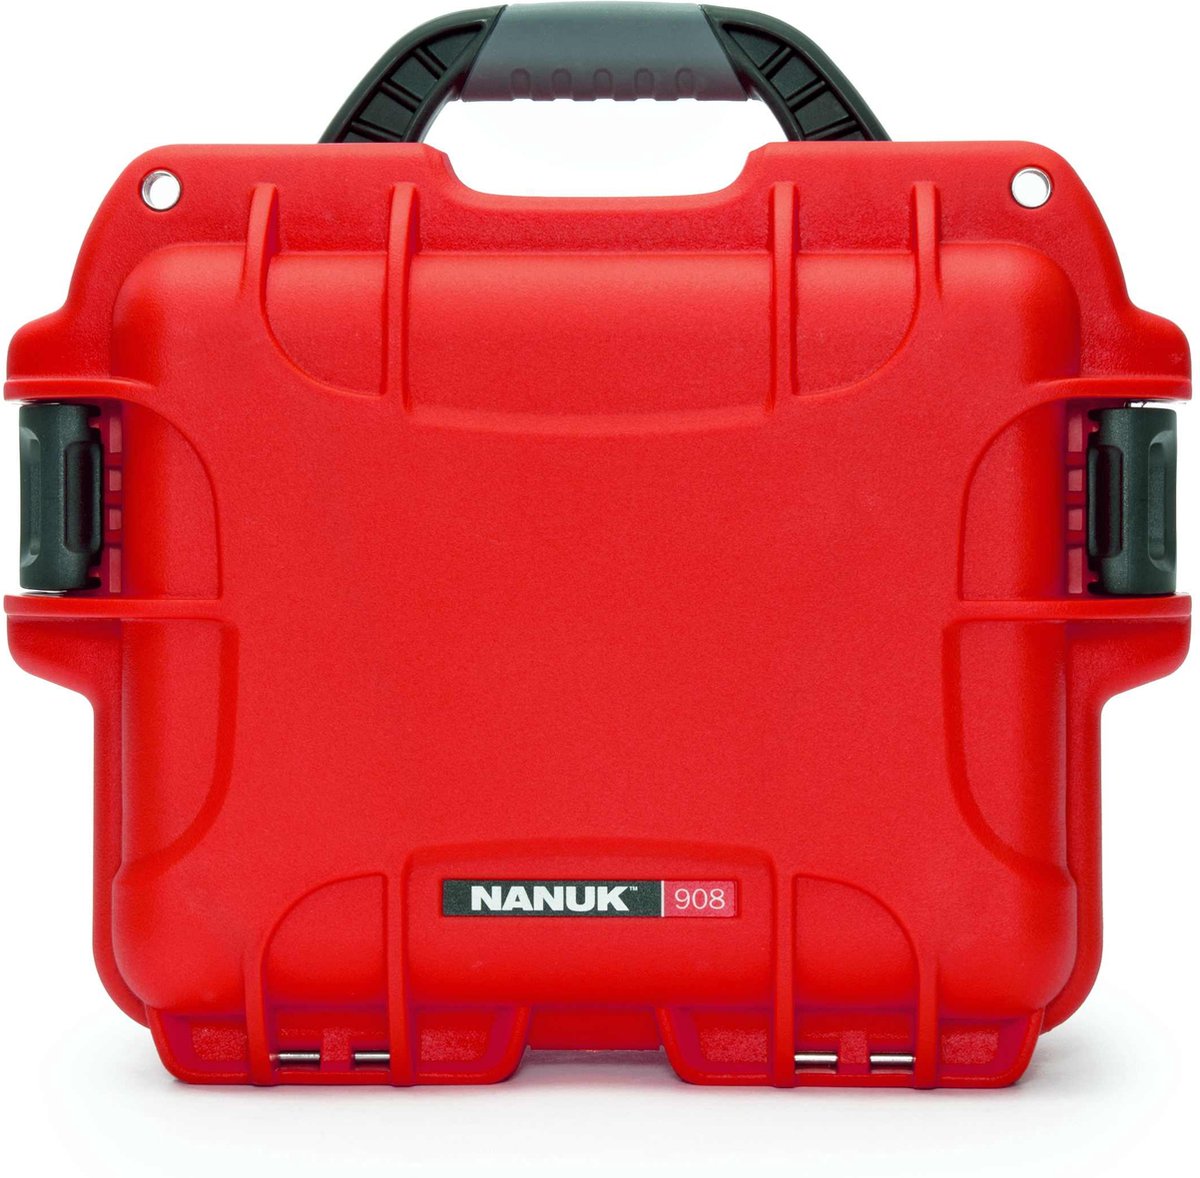 Nanuk 908 Case - Red